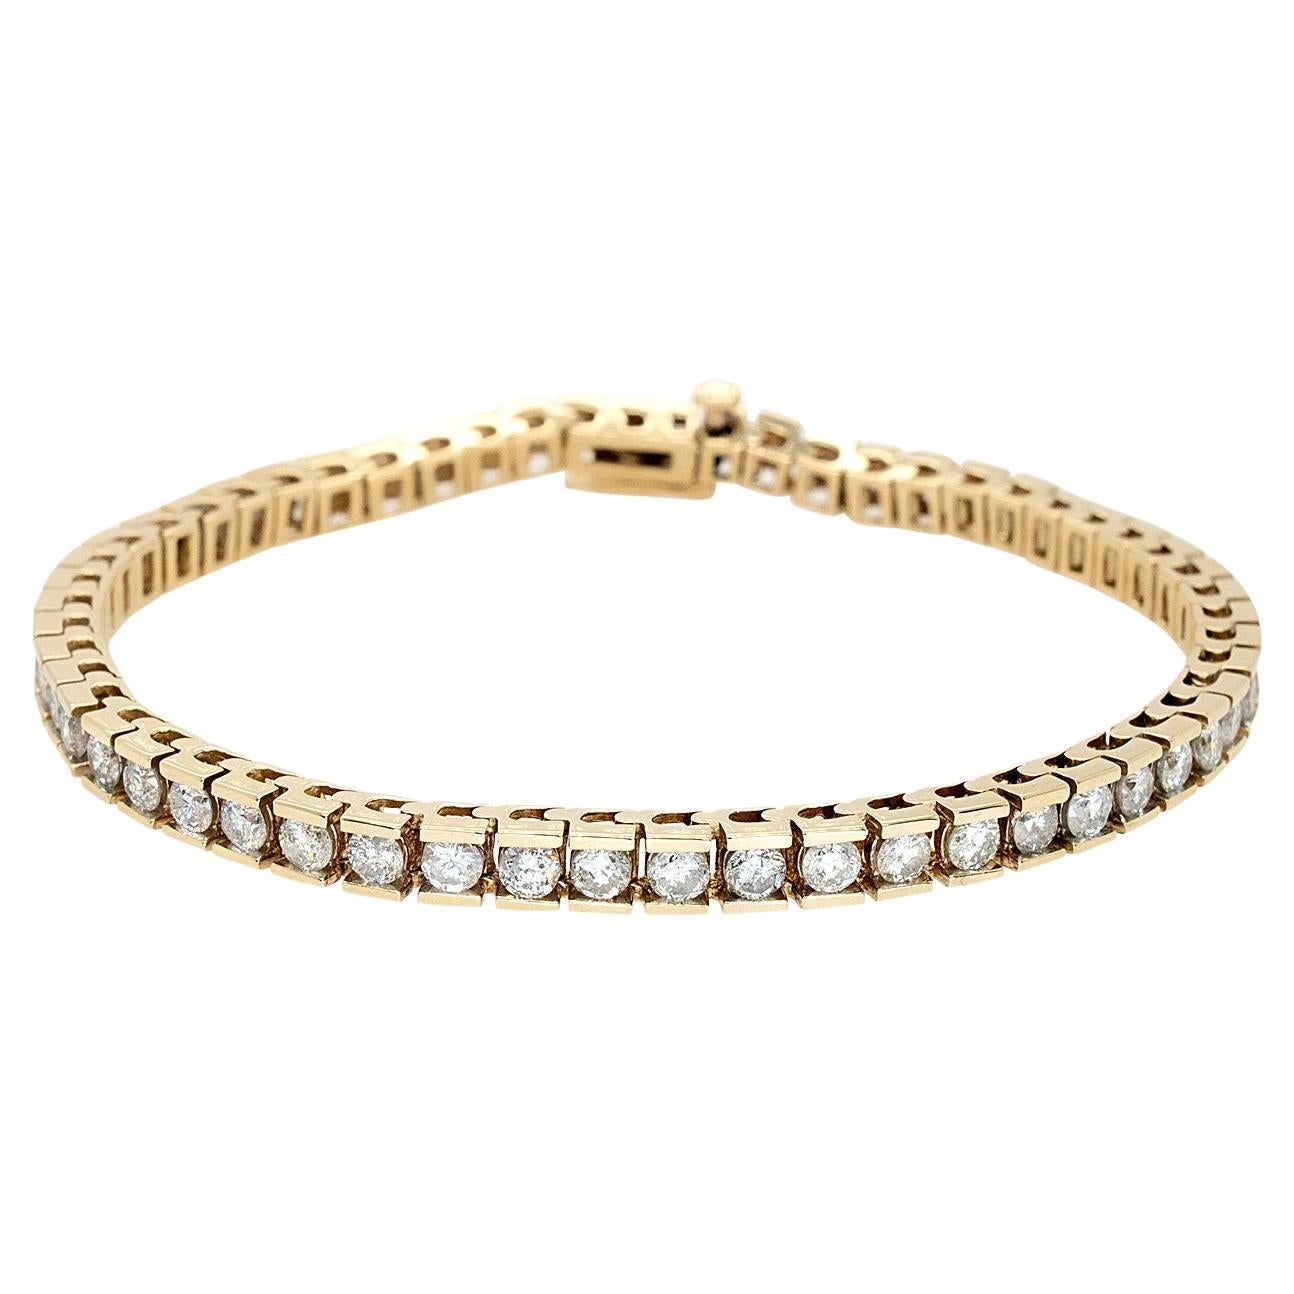 Bracelet tennis en or jaune 14 carats avec diamants naturels brillants ronds de 1,75 carat